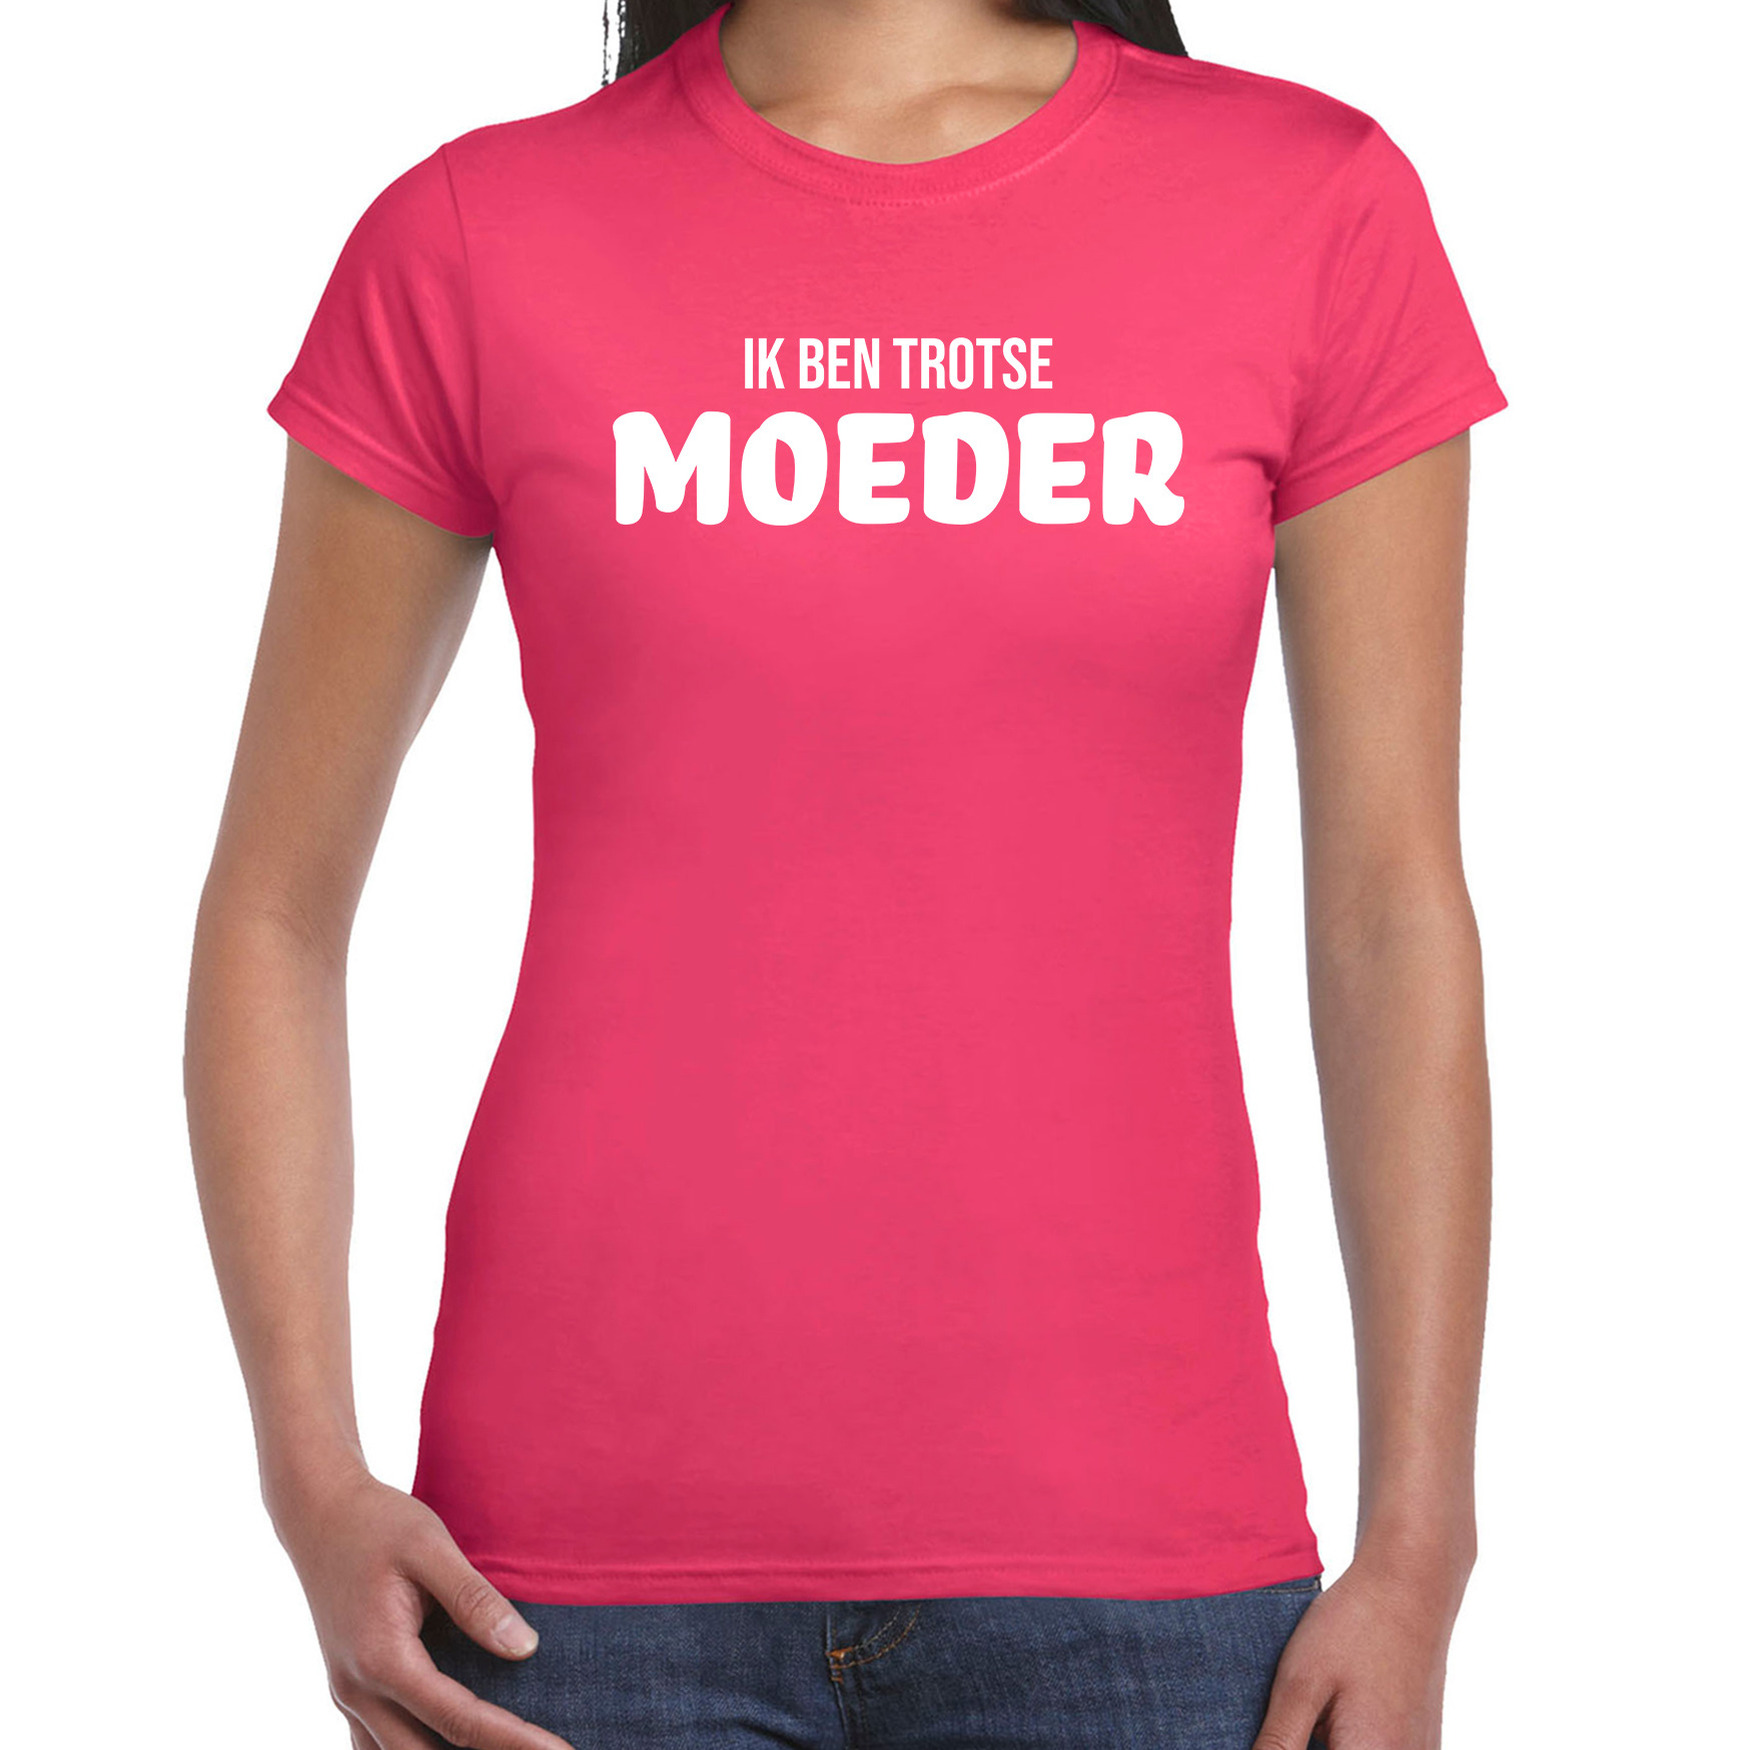 Ik ben trotse moeder t-shirt fuchsia roze voor dames - moederdag cadeau shirt mama